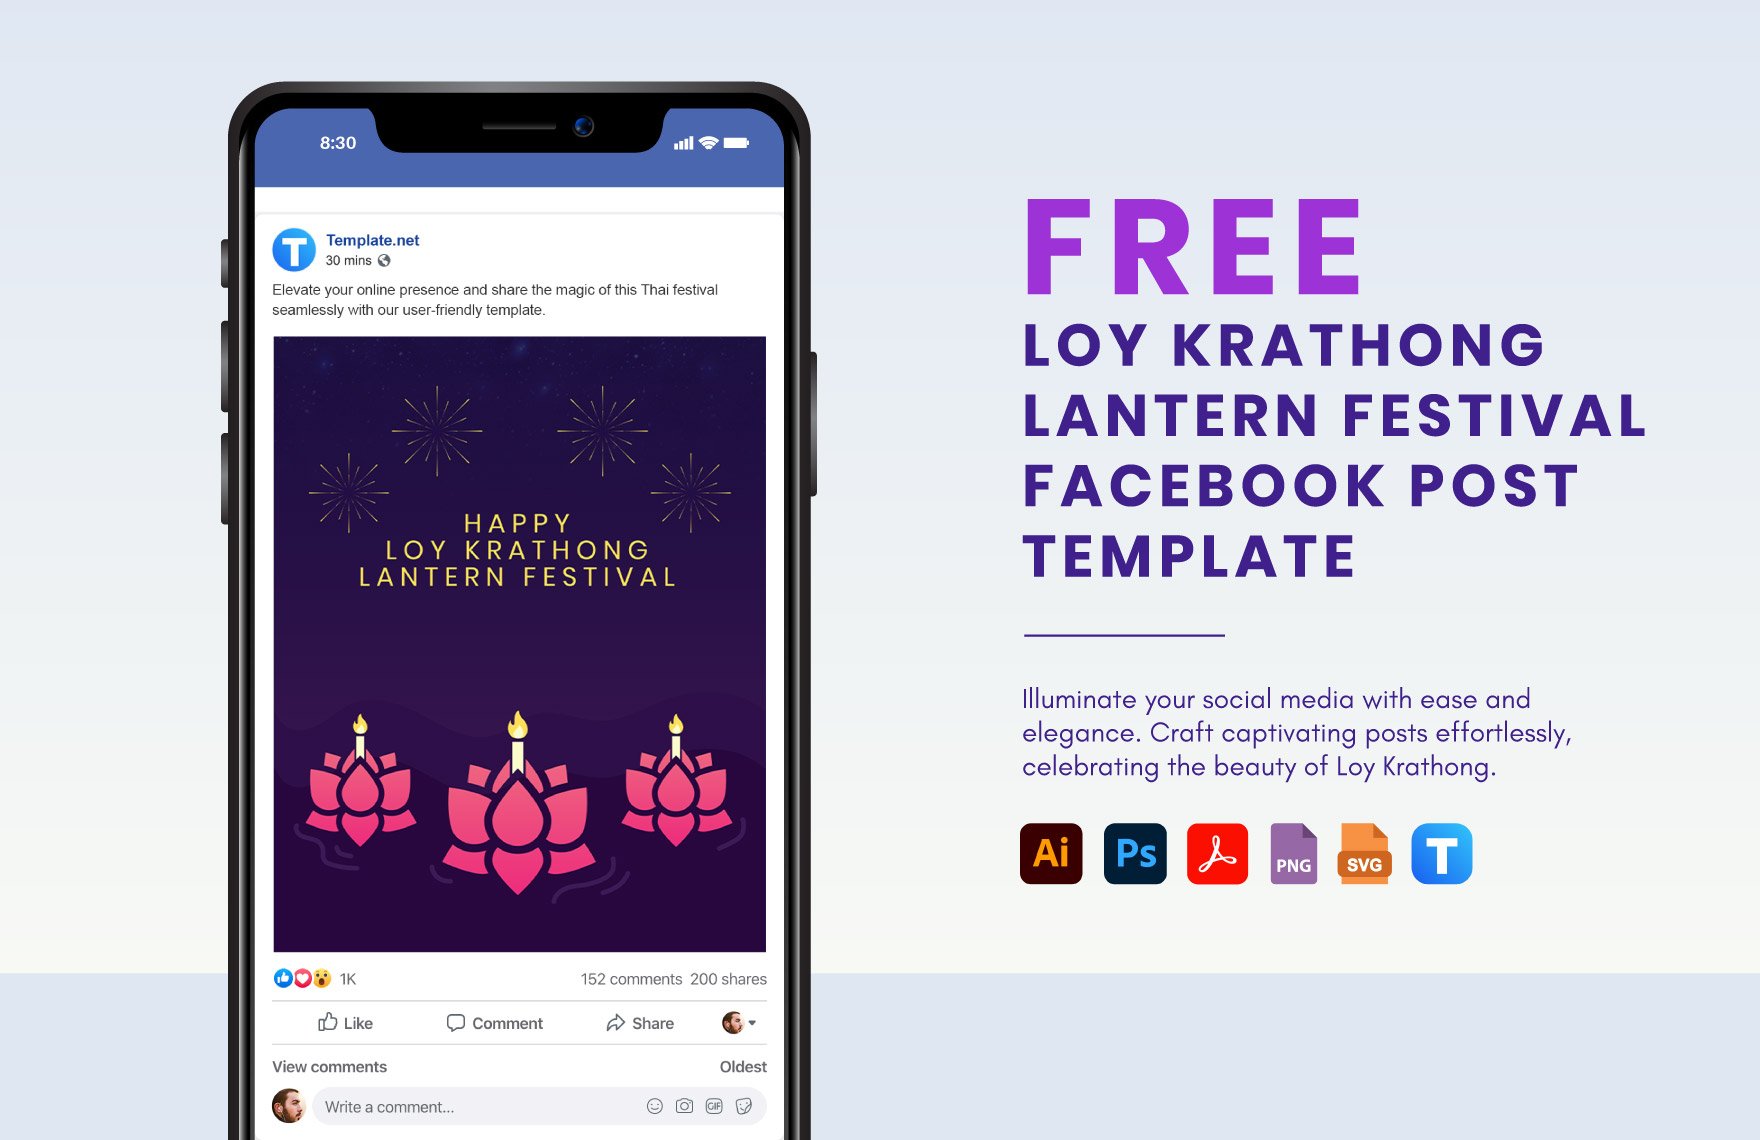 Loy Krathong Lantern Festival Facebook Post Template